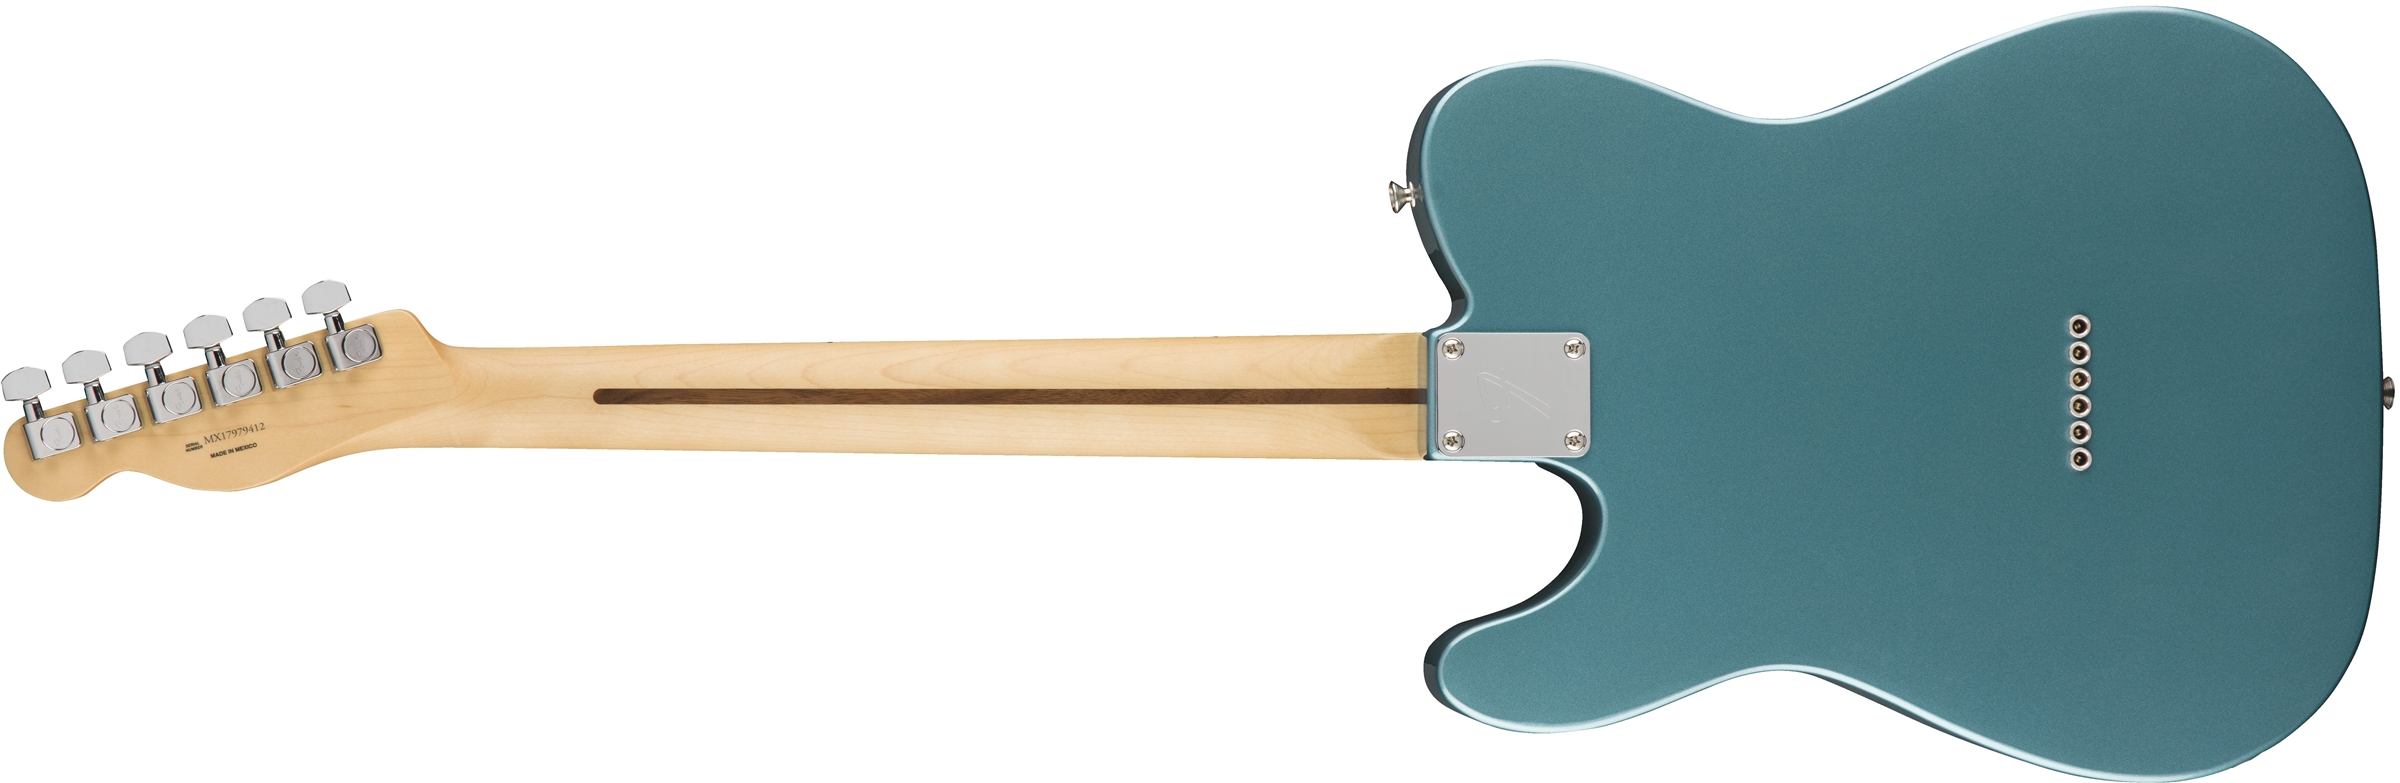 Fender Tele Player Mex Mn - Tidepool - Guitarra eléctrica con forma de tel - Variation 2